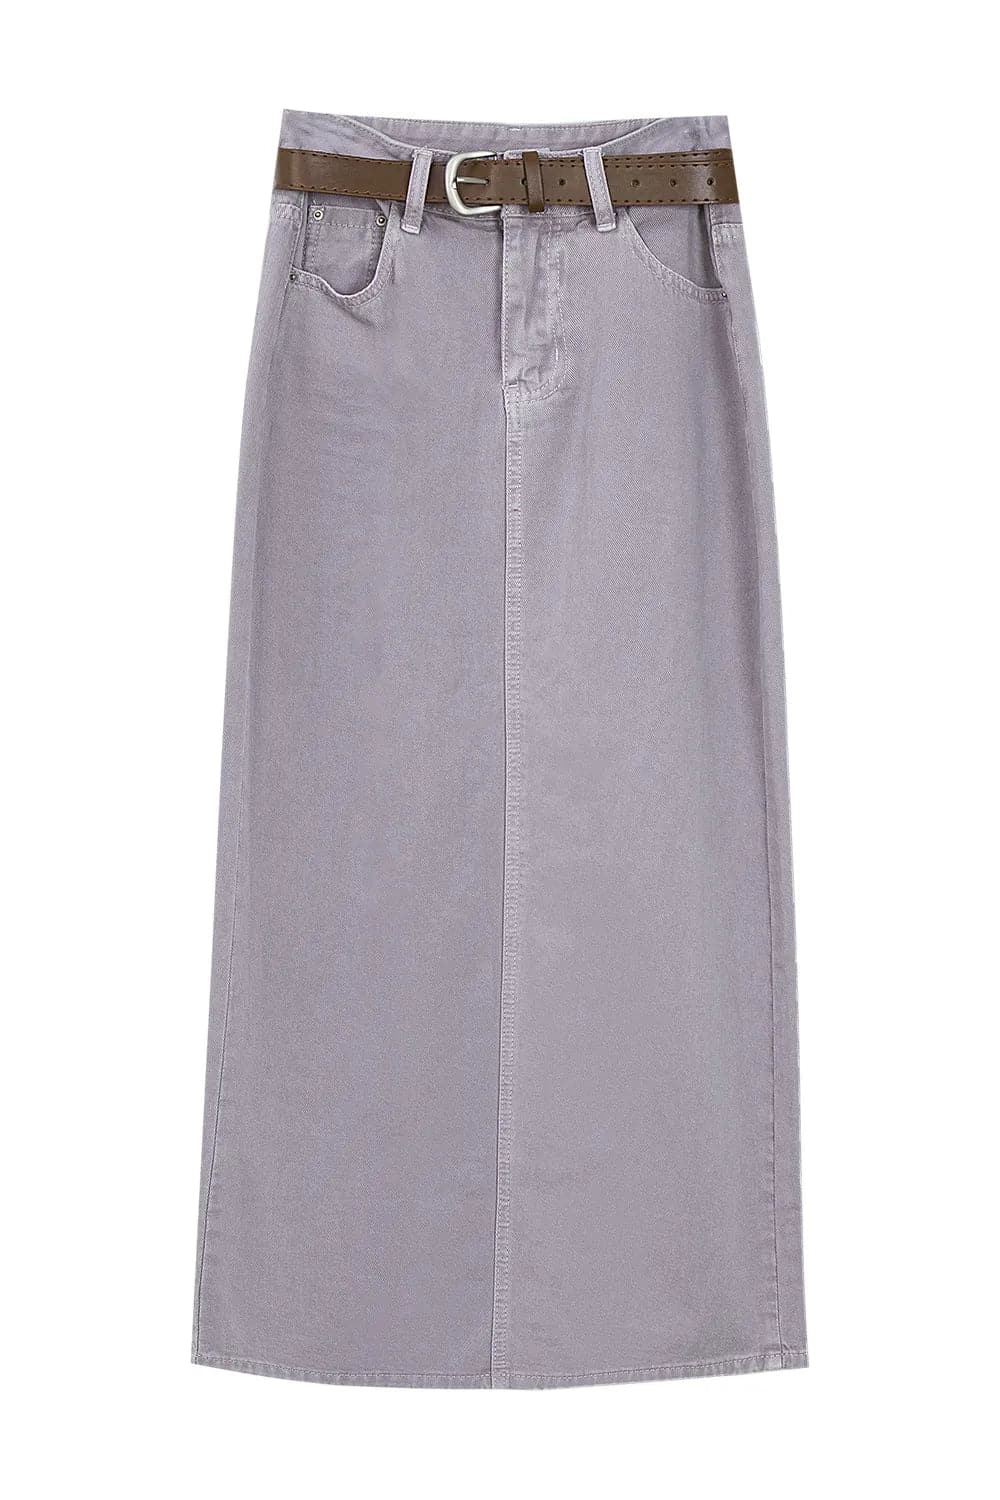 Skirt Midi A-Line Beige dengan Tali Pinggang